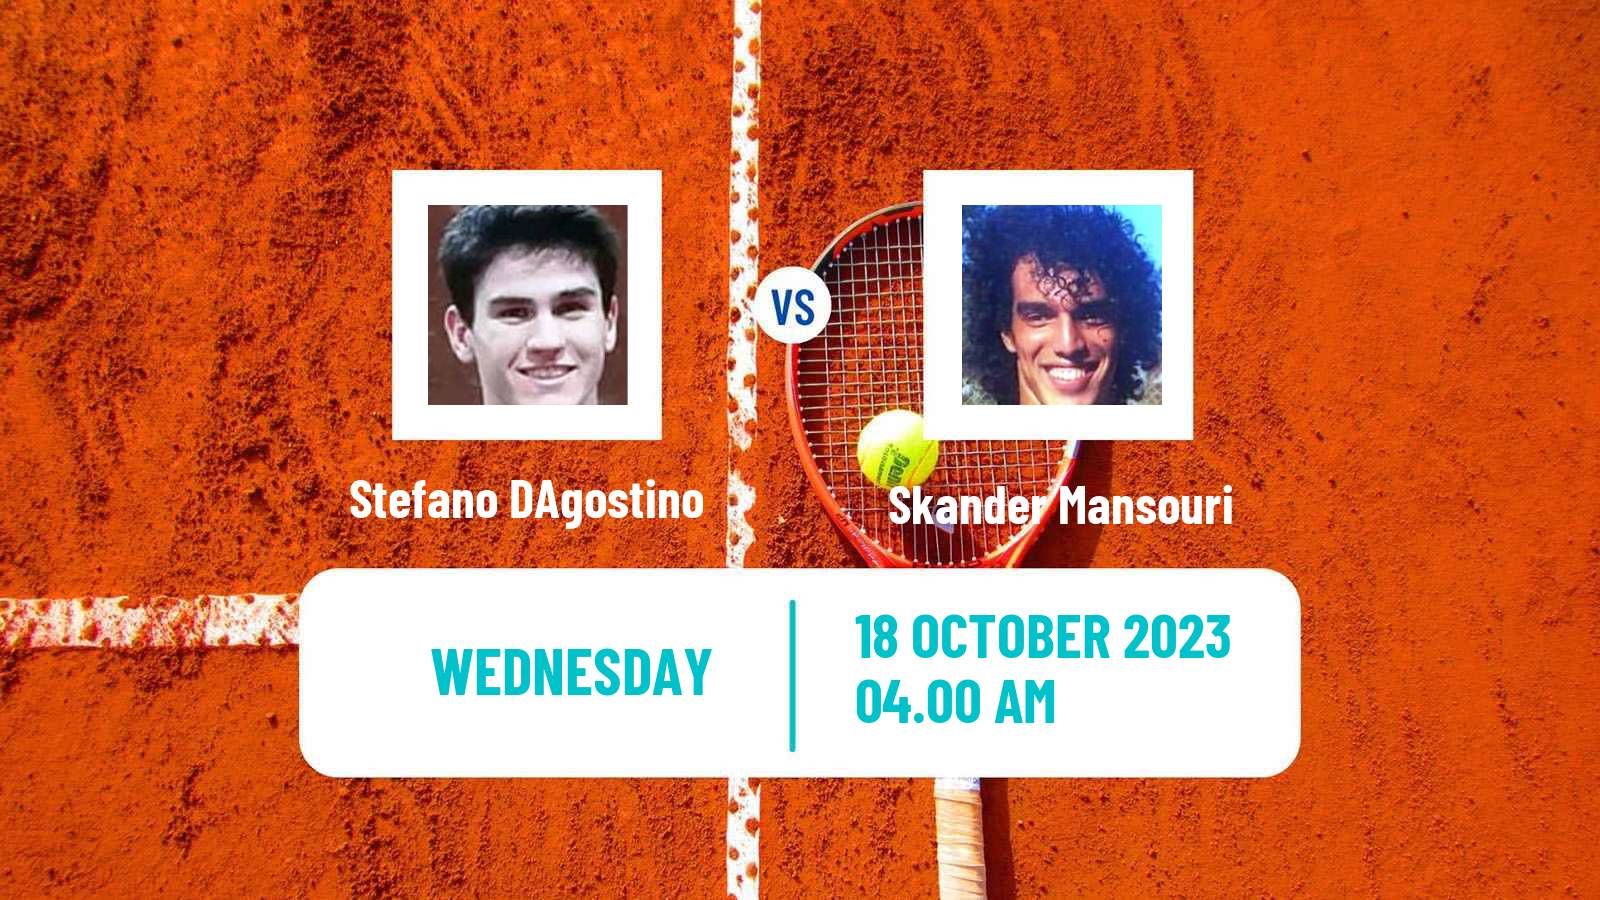 Tennis ITF M15 Monastir 42 Men Stefano DAgostino - Skander Mansouri